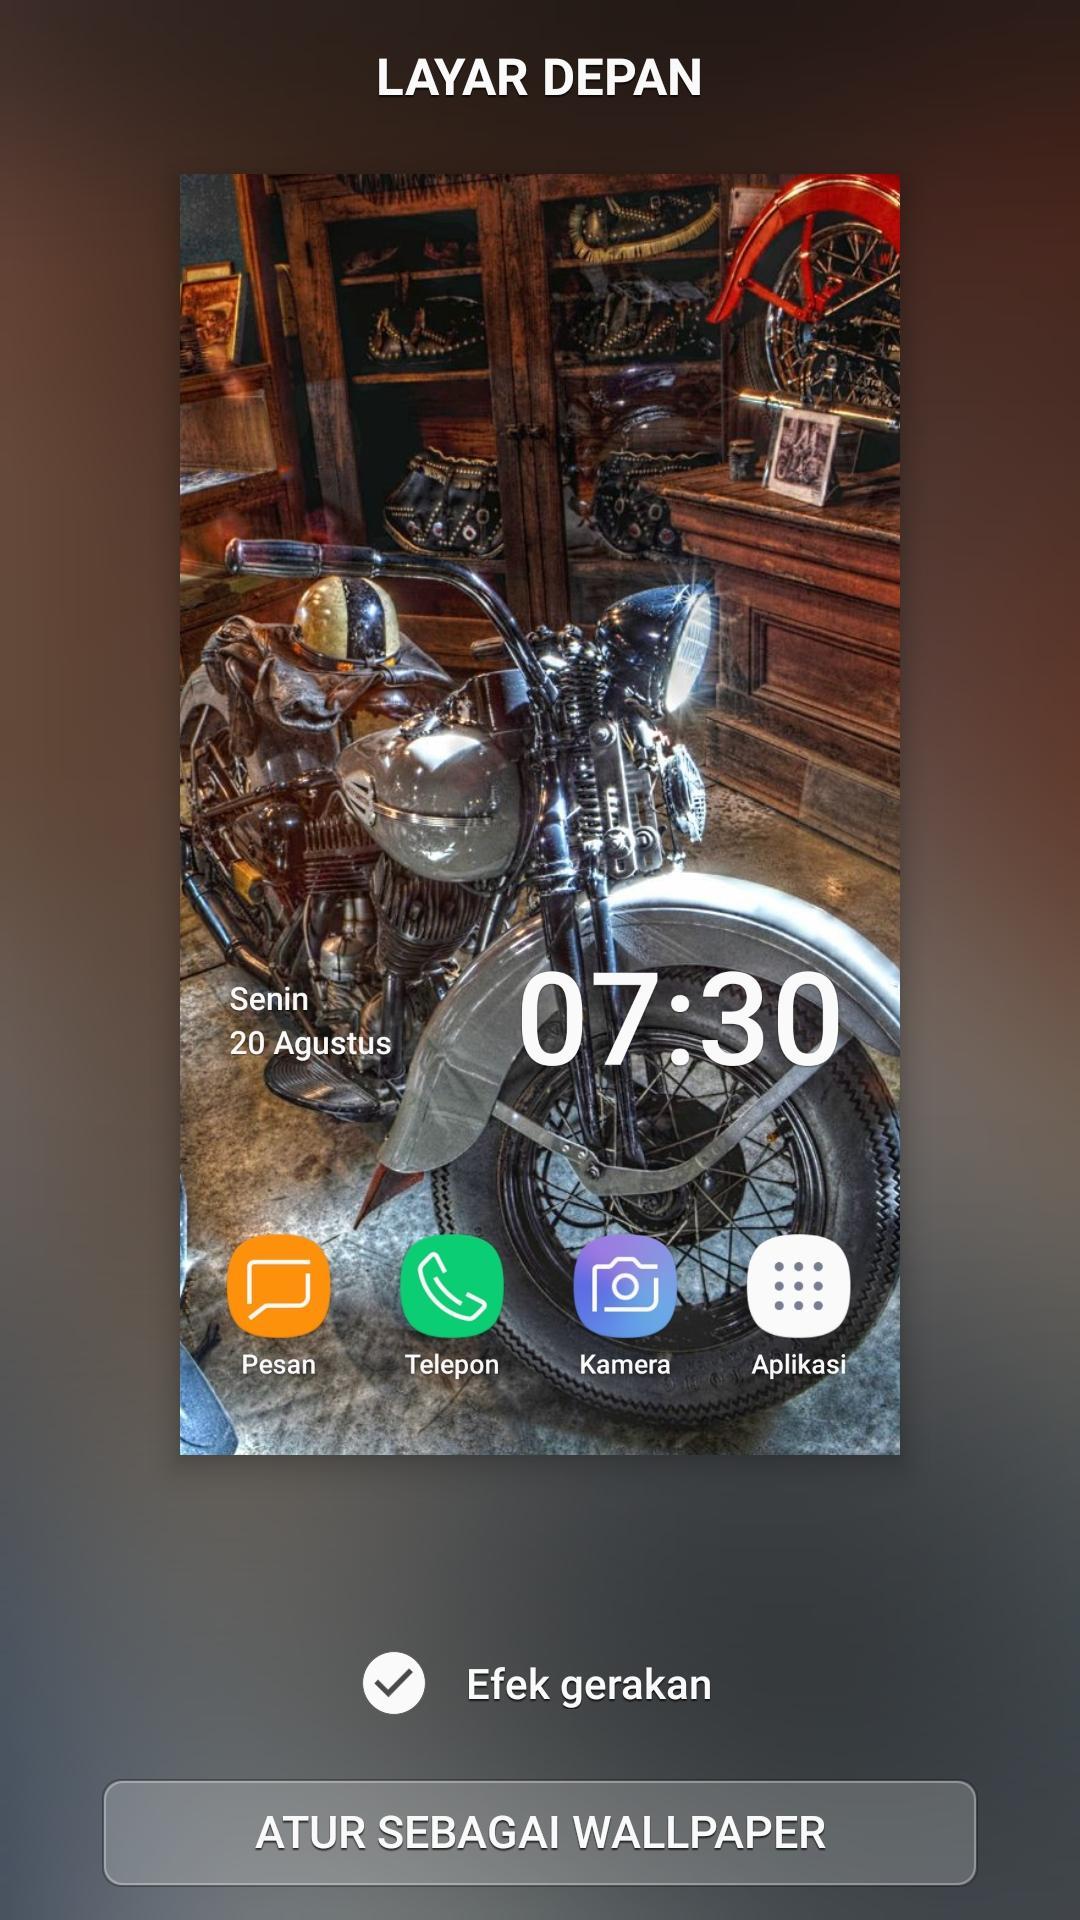 Harley Davidson Background Image, Great Background - Paling Keren , HD Wallpaper & Backgrounds